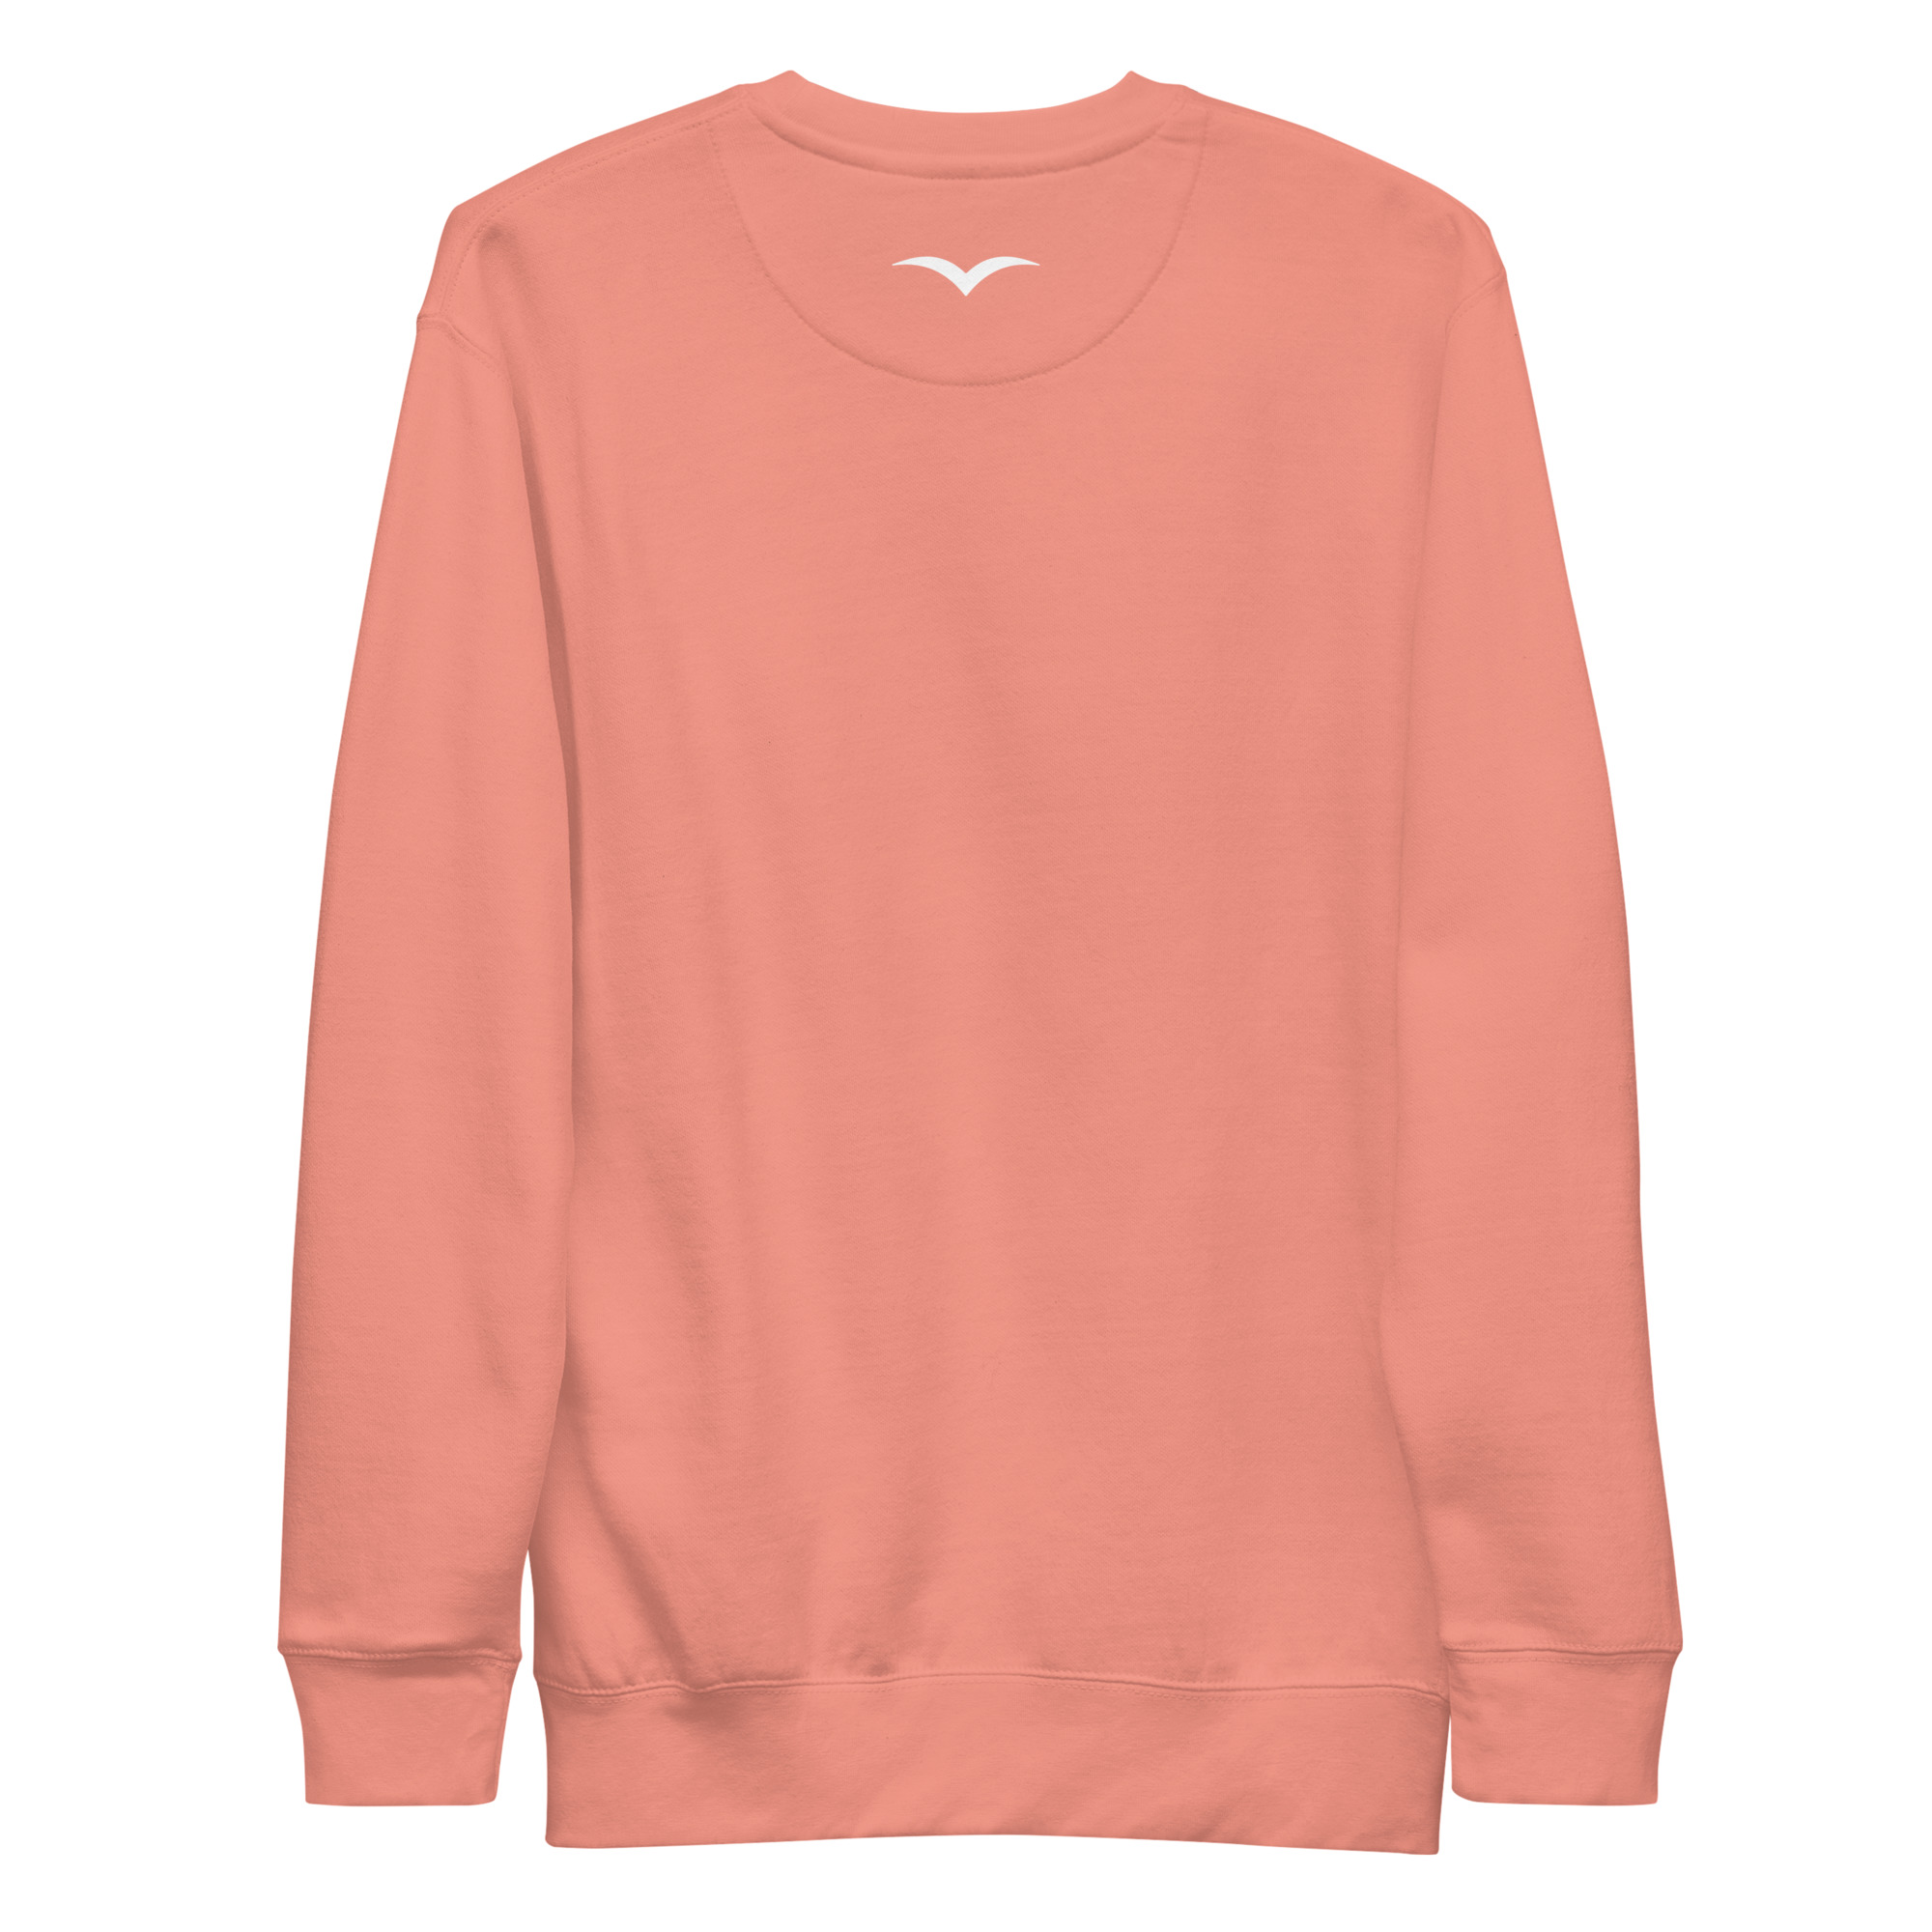 unisex-premium-sweatshirt-dusty-rose-back-64136bbe280fe.jpg